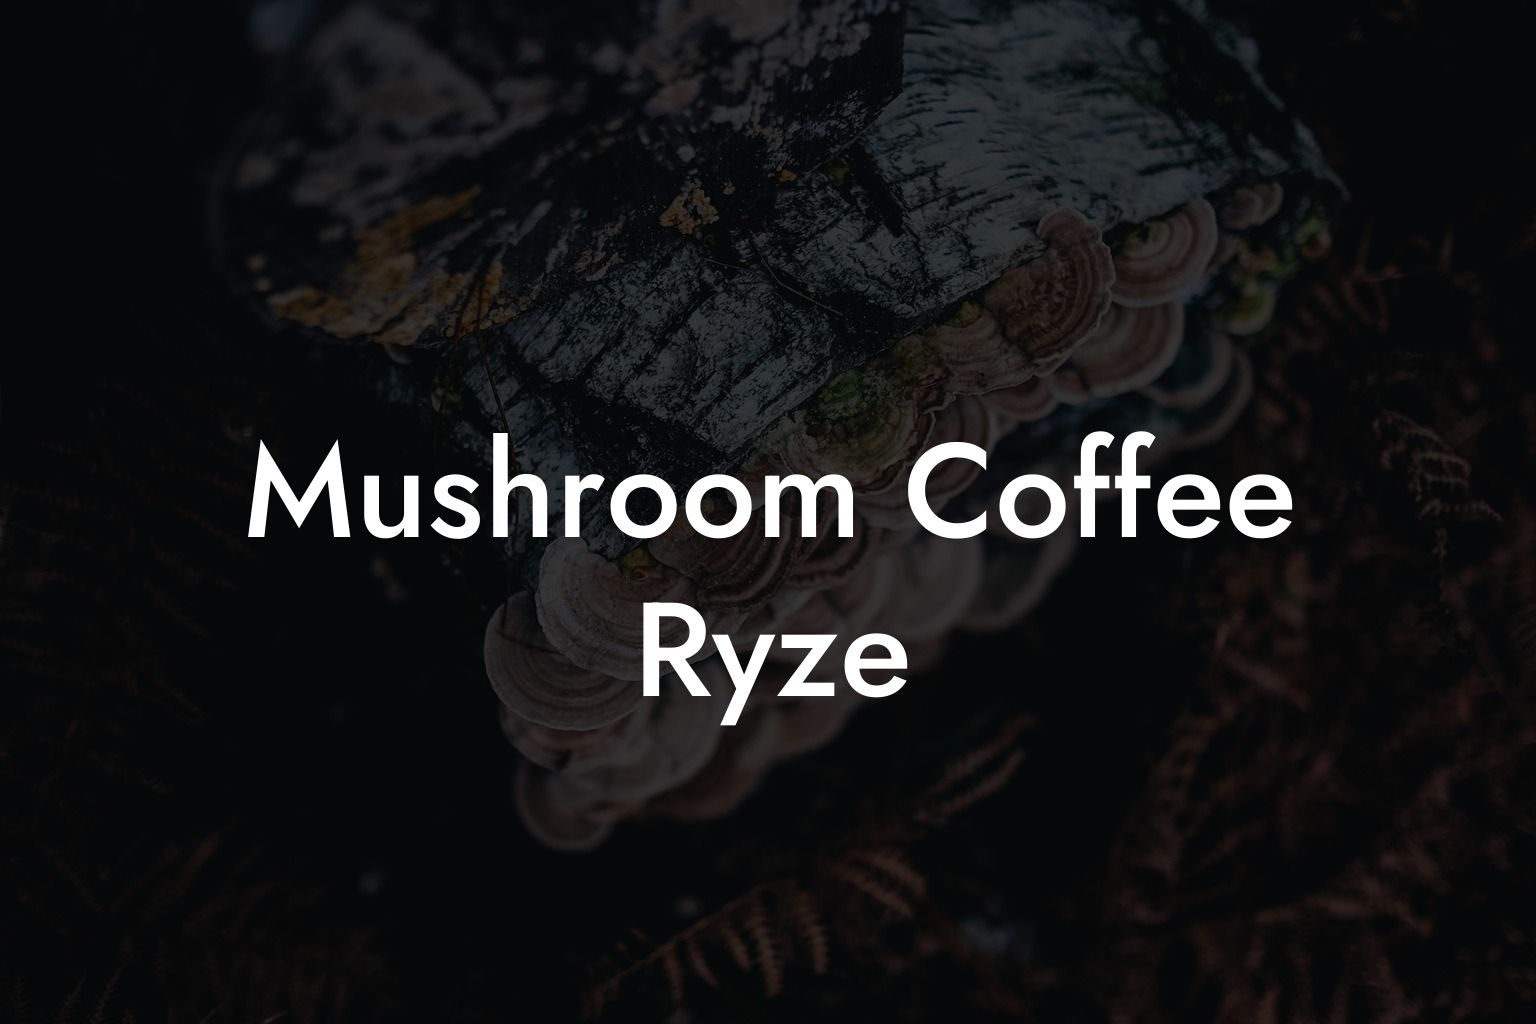 Mushroom Coffee Ryze